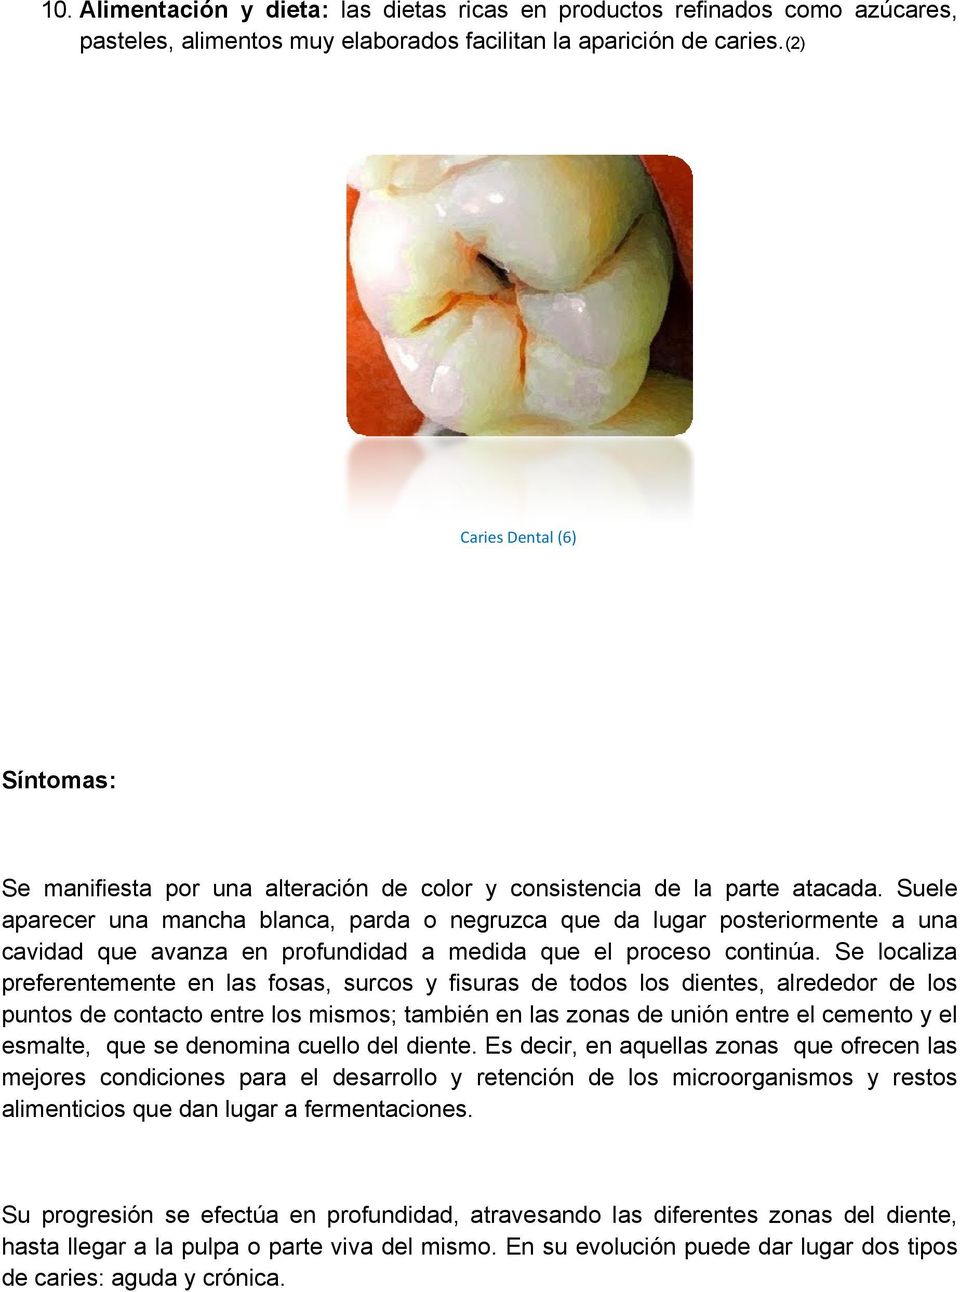 dieta y caries dental pdf)